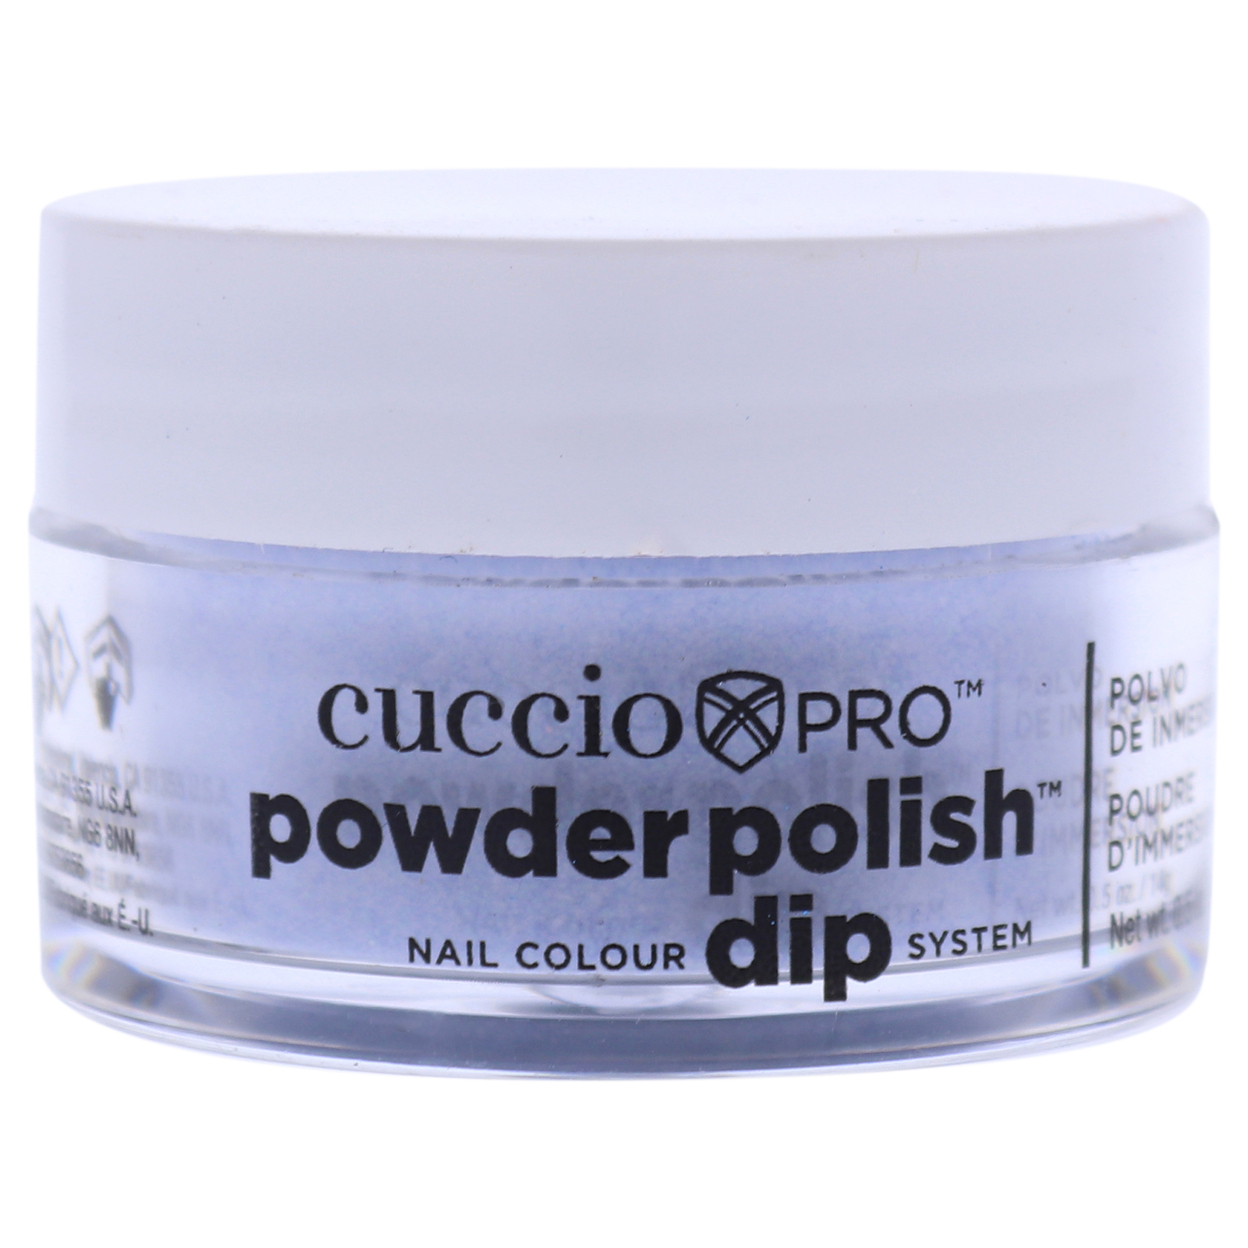 Cuccio Colour Pro Powder Polish Nail Colour Dip System - Baby Blue Glitter Nail Powder 0.5 Oz